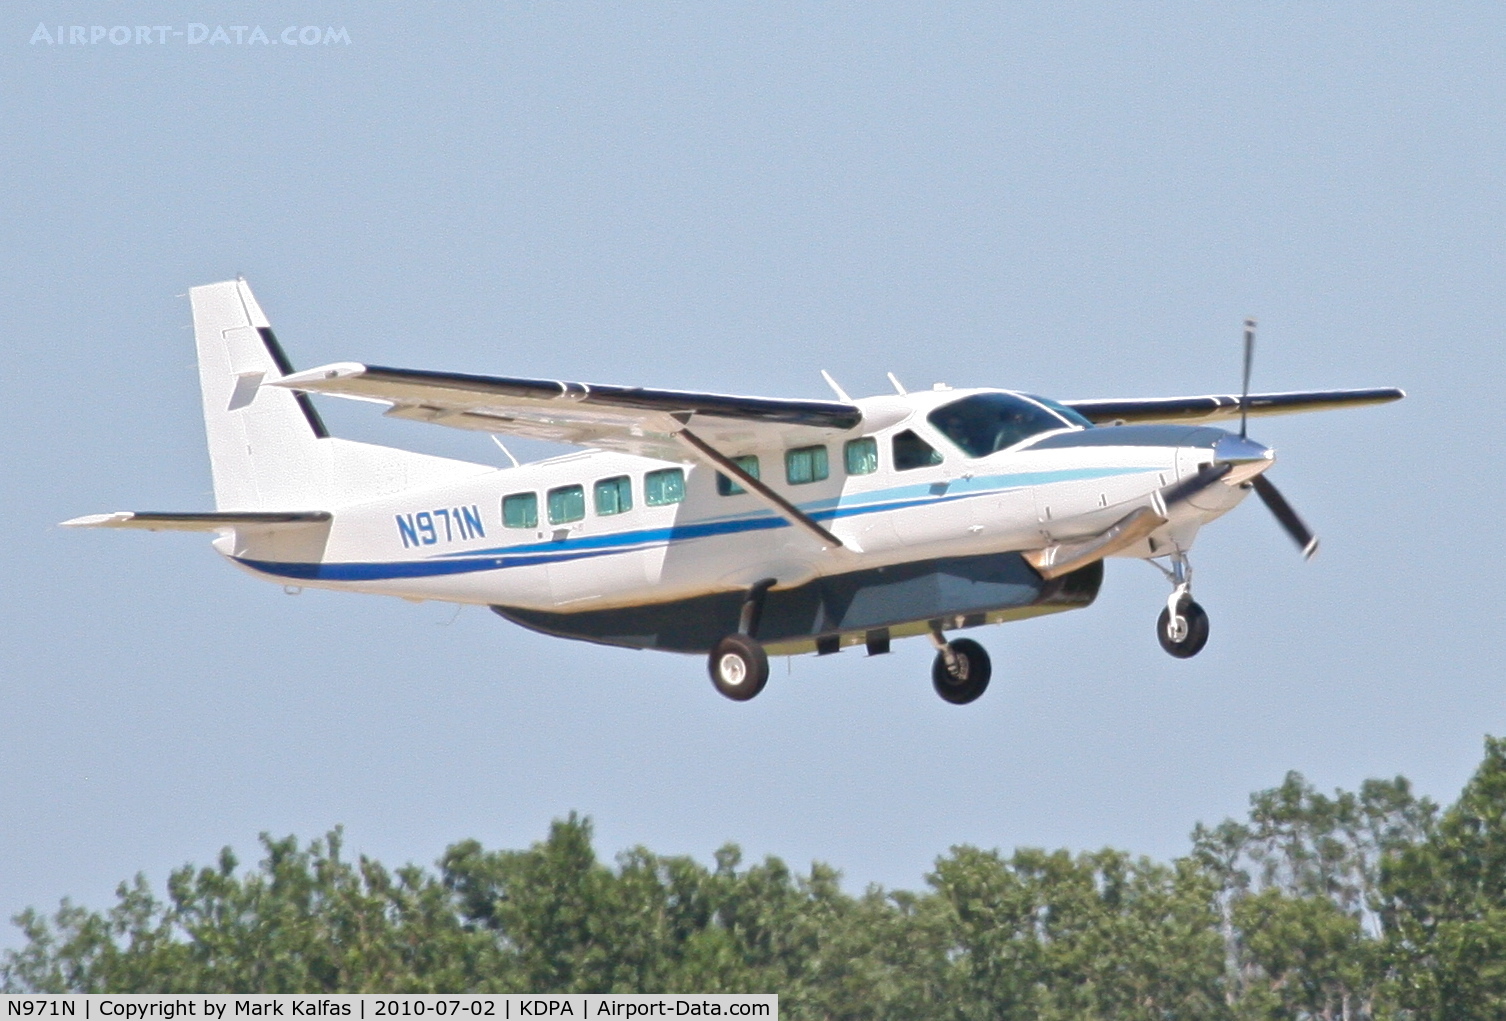 N971N, 2004 Cessna 208B Grand Caravan C/N 208B1071, WORLDWIDE AIRCRAFT LEASING CORP Cessna 208B Grand Carivan, N971N departing 20R KDPA while practicing full stop landings.